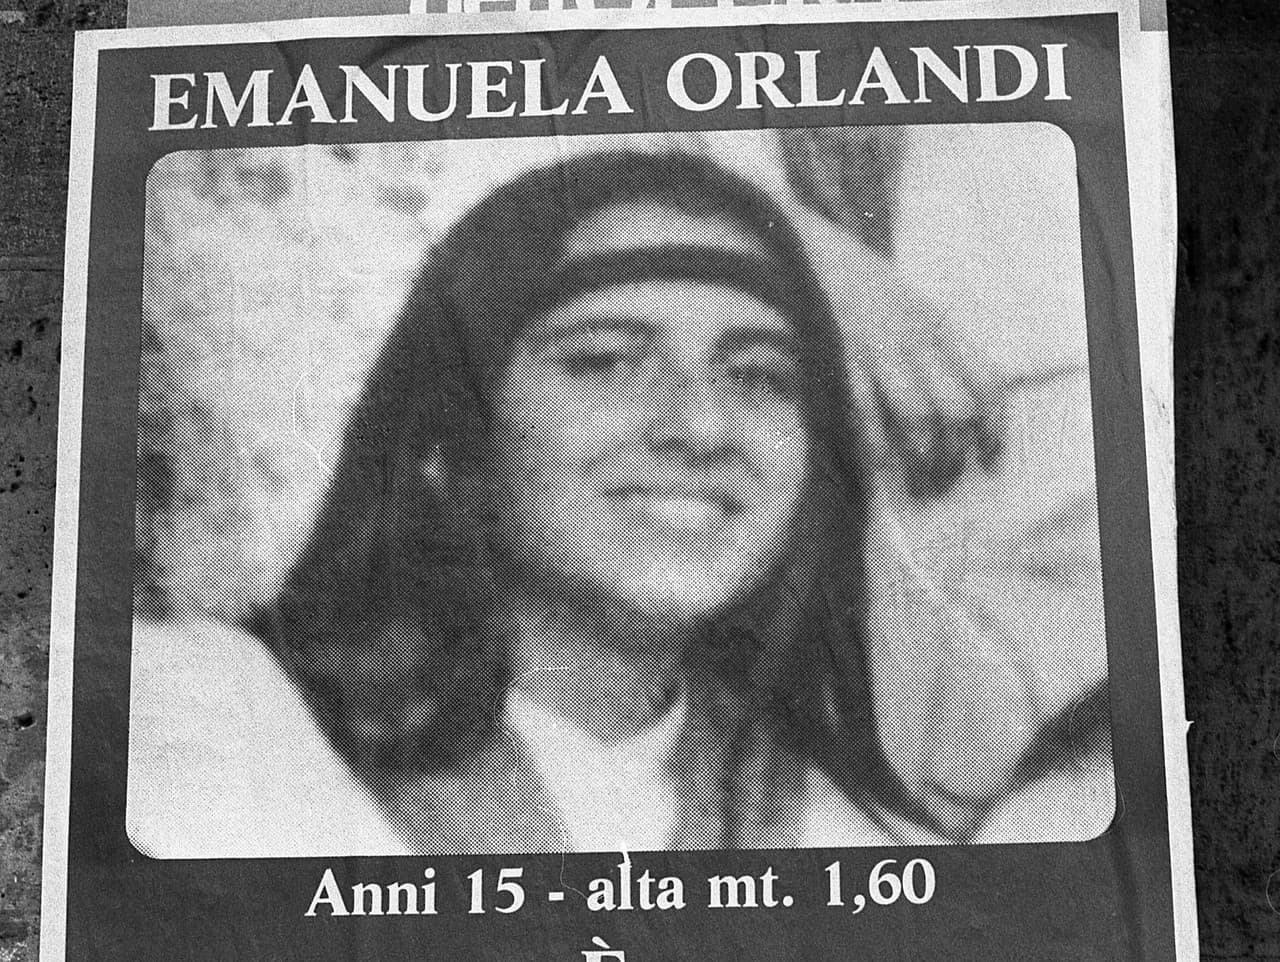 Emanuela Orlandi
